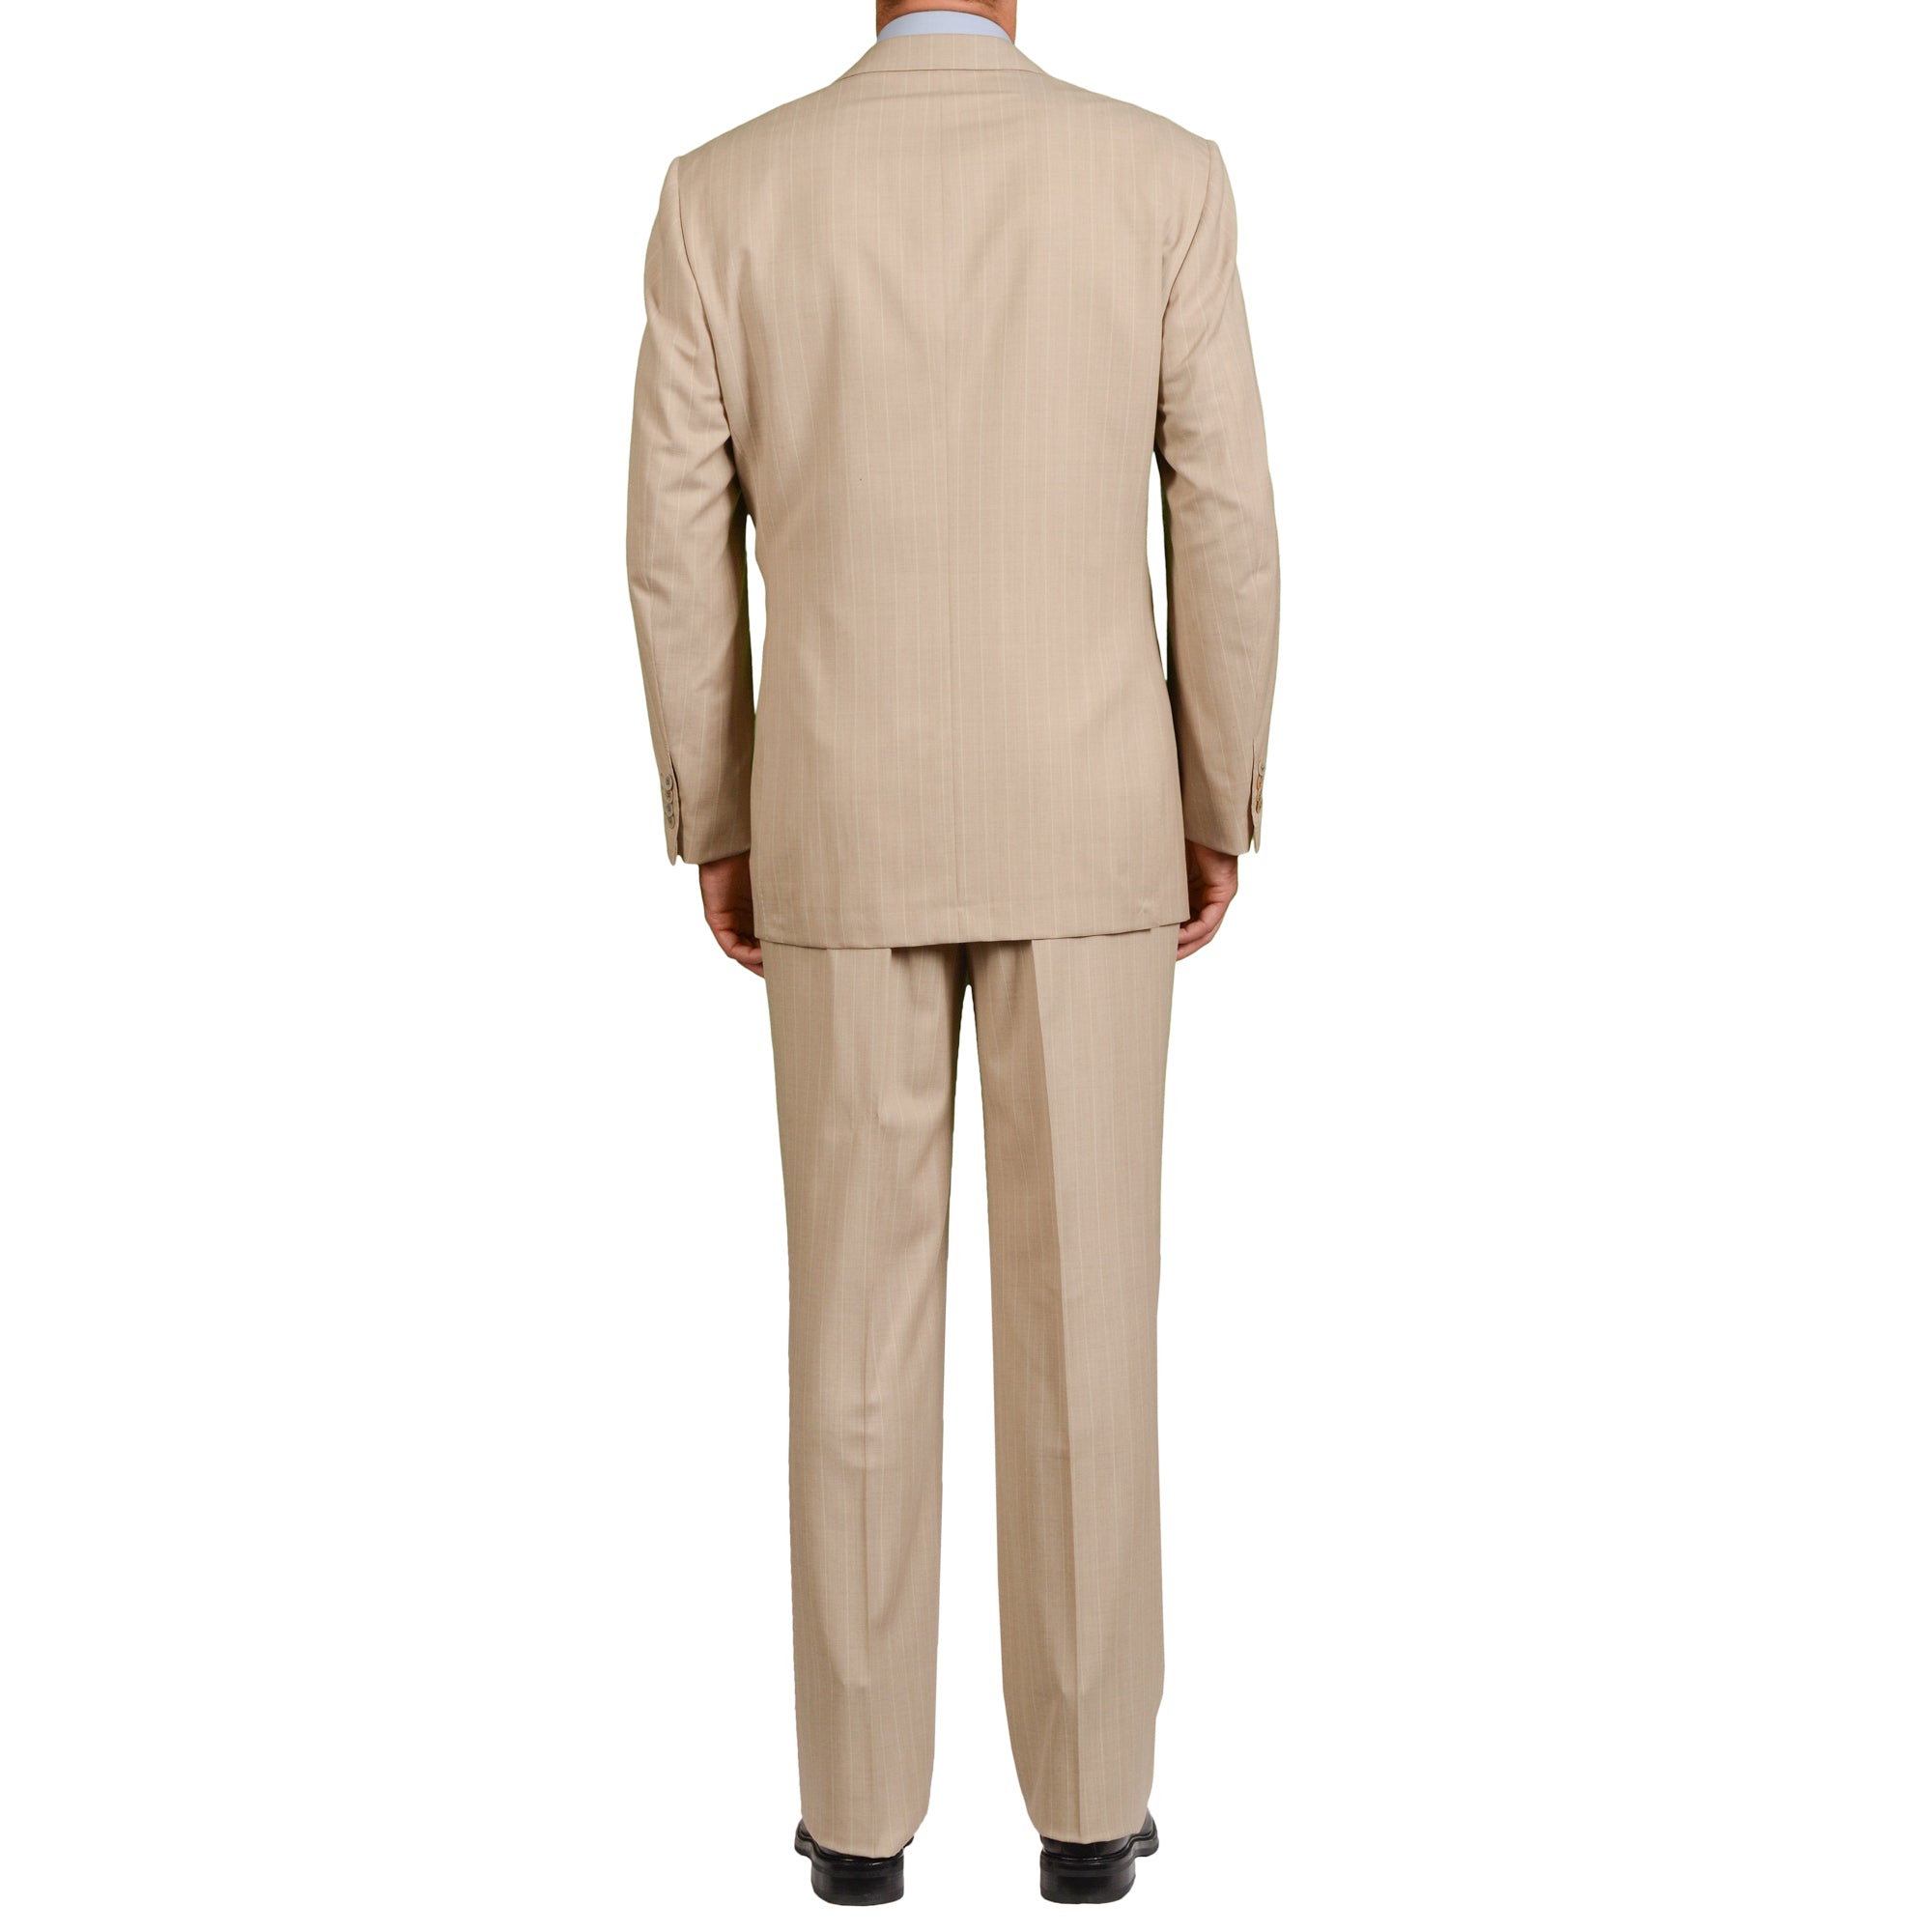 AMIR by D'AVENZA Handmade Beige Super 150’s Suit EU 54 NEW US 44 Luxury AMIR